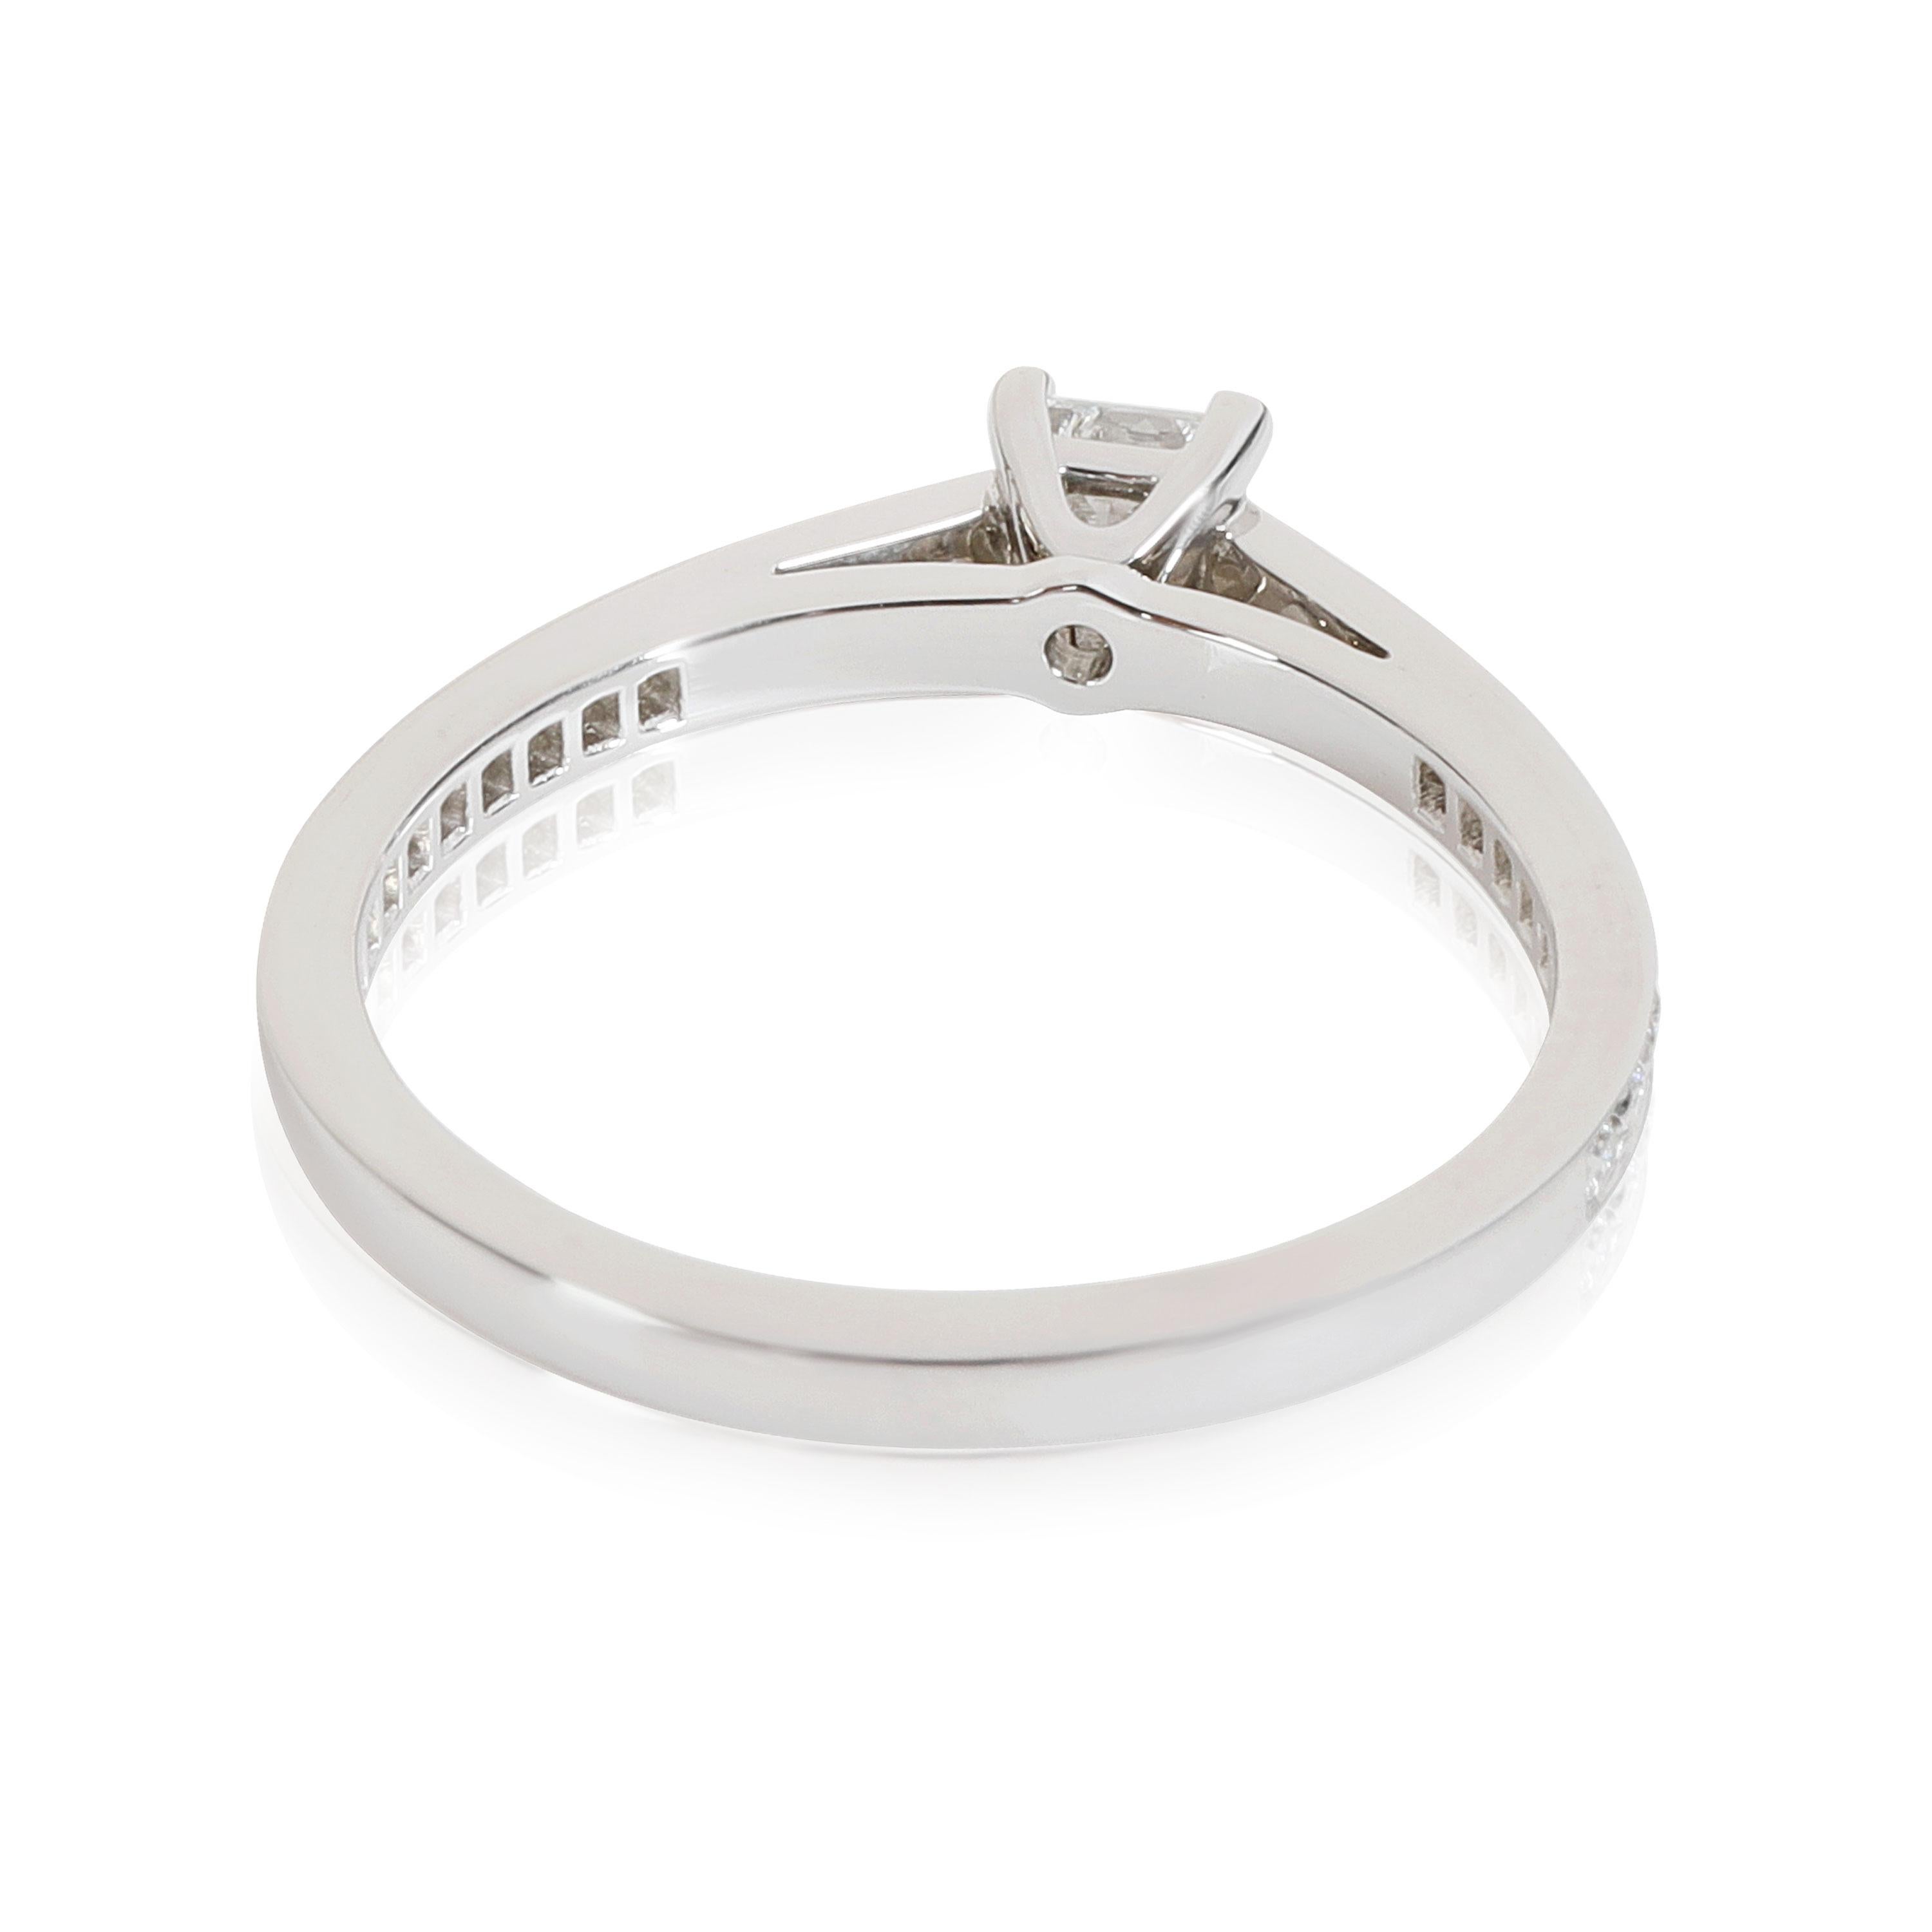 Tiffany & Co. Grace Diamond Engagement Ring in Platinum D VS1 0.35 CT

PRIMARY DETAILS
SKU: 113070
Listing Title: Tiffany & Co. Grace Diamond Engagement Ring in Platinum D VS1 0.35 CT
Condition Description: Retails for 3,930 USD. In excellent